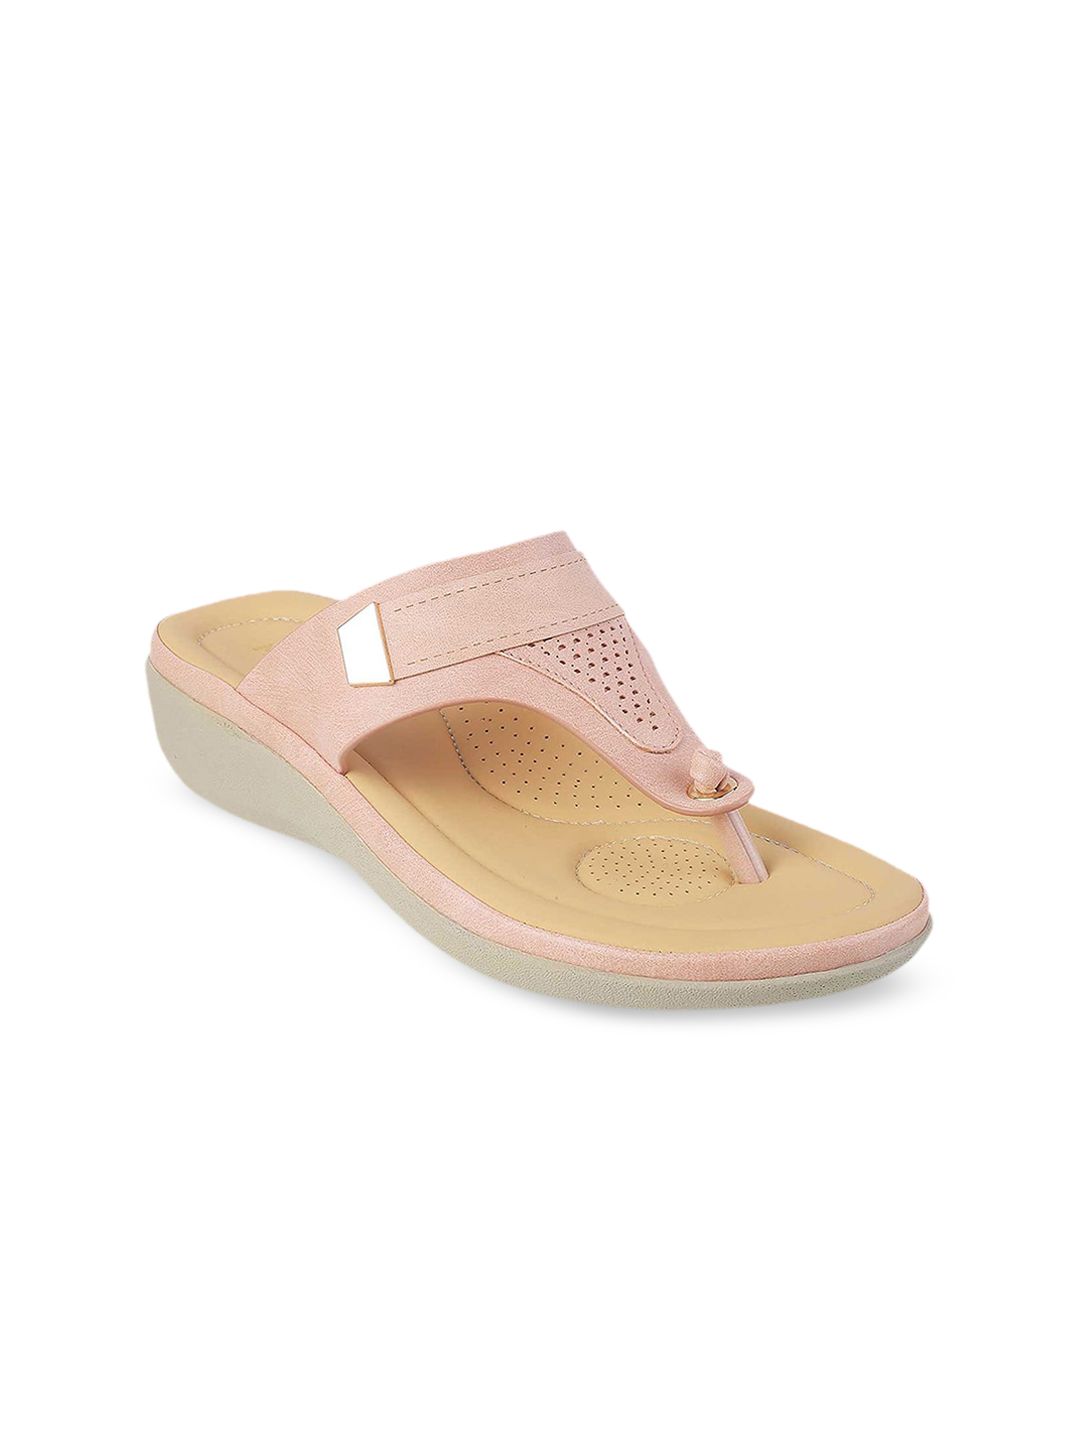 Mochi Peach-Coloured Textured Comfort Sandals Price in India